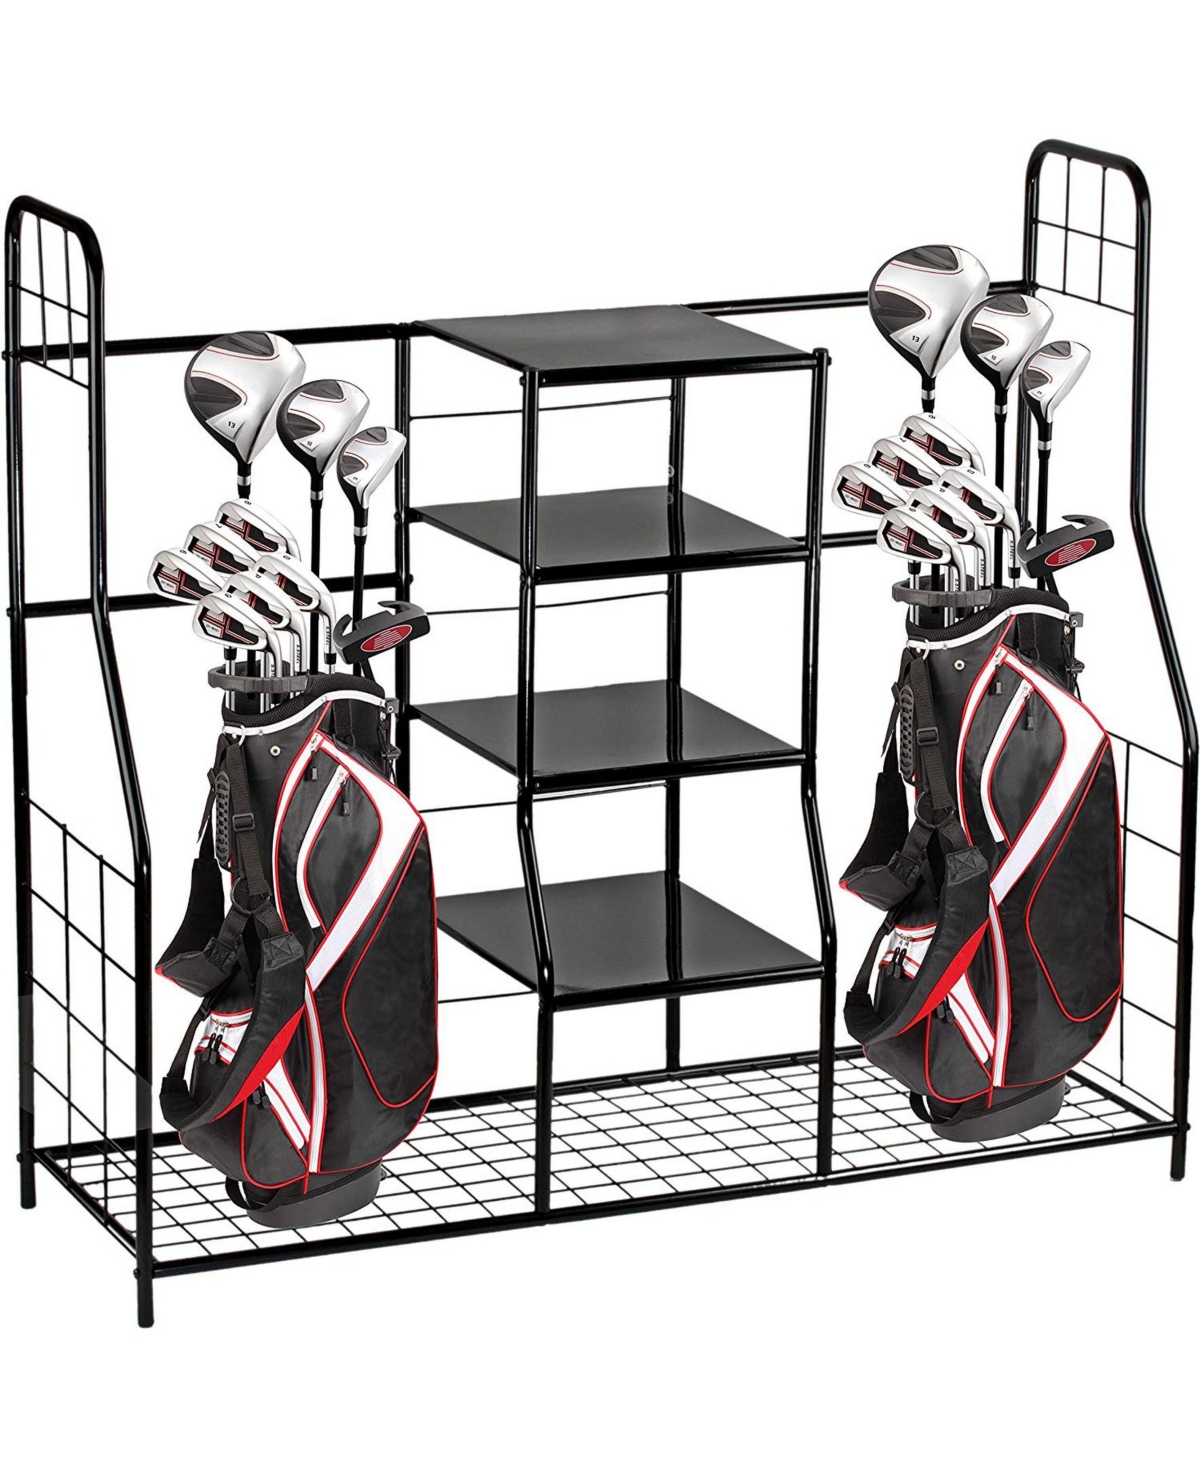 Golf Bag Sports Dual Golf Storage Organizer - Golf Organizer Rack for Indoor & Outdoor - Large Capacity Garage Sports Equipment Organizer - Black